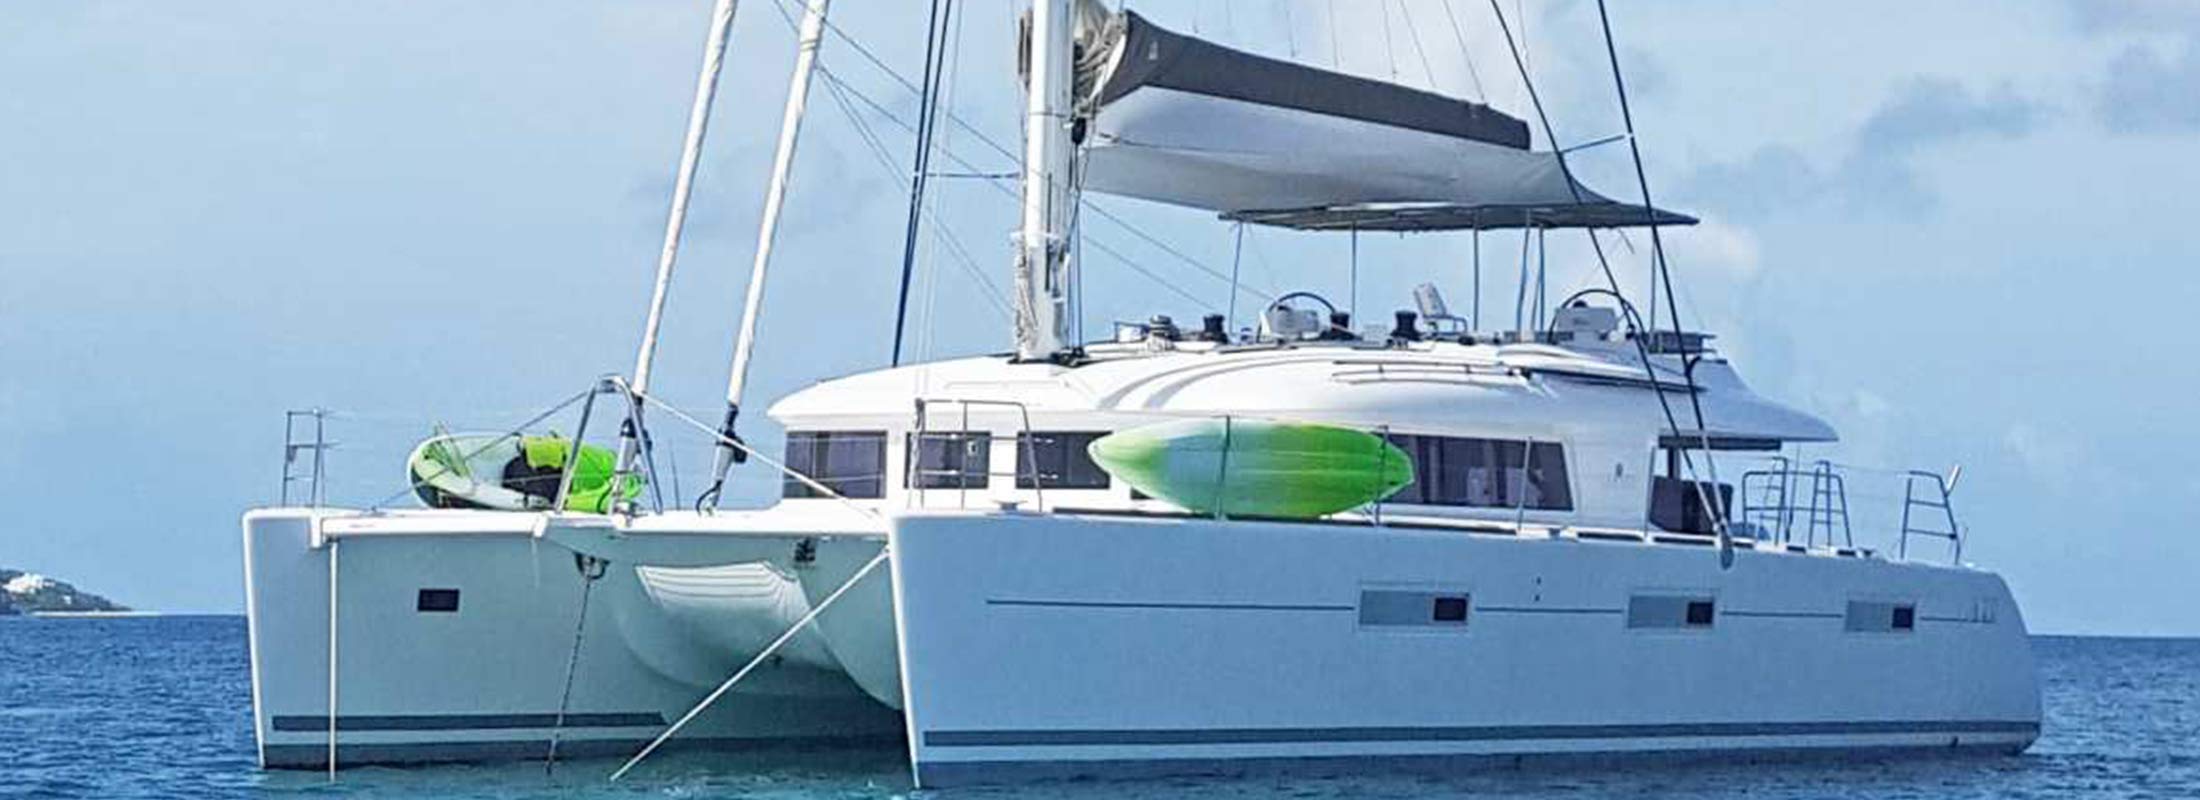 Vacoa Sailing Yacht for Charter Caribbean Sea slider 1